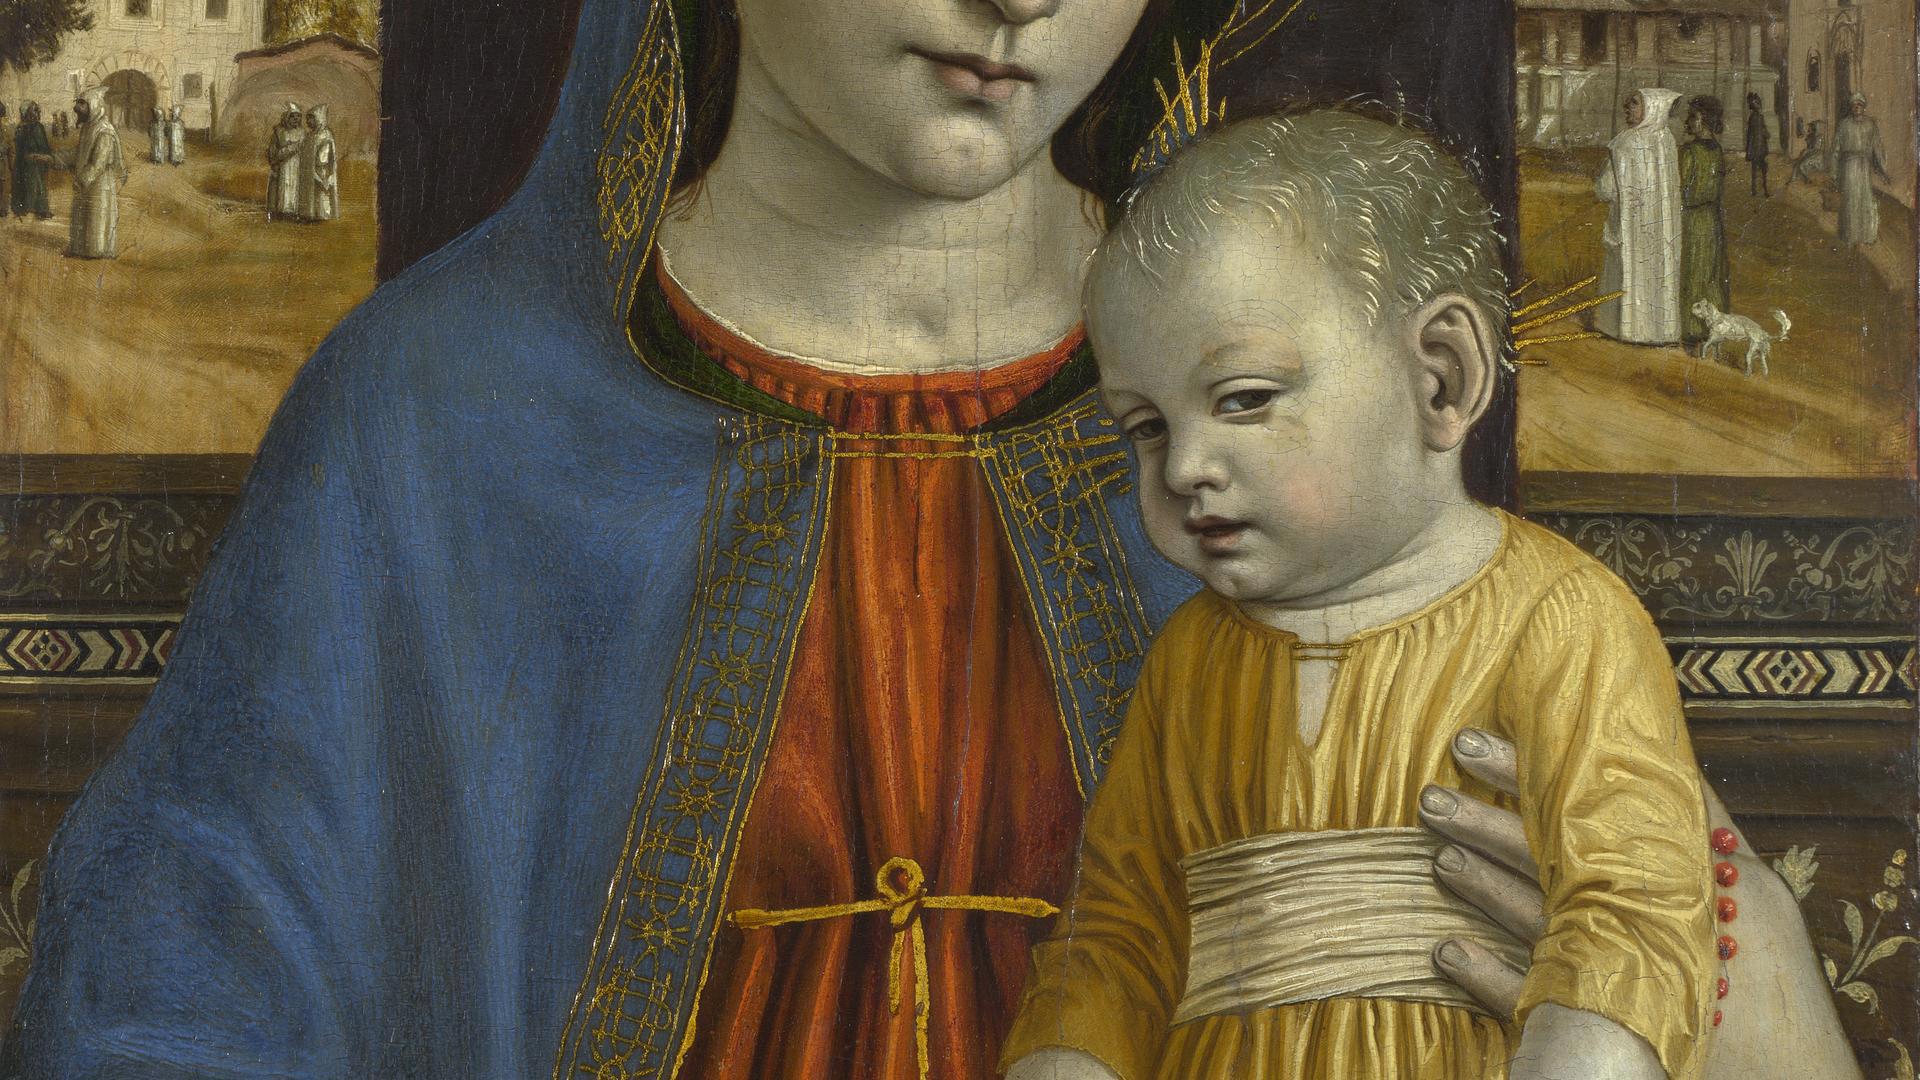 The Virgin and Child by Ambrogio Bergognone